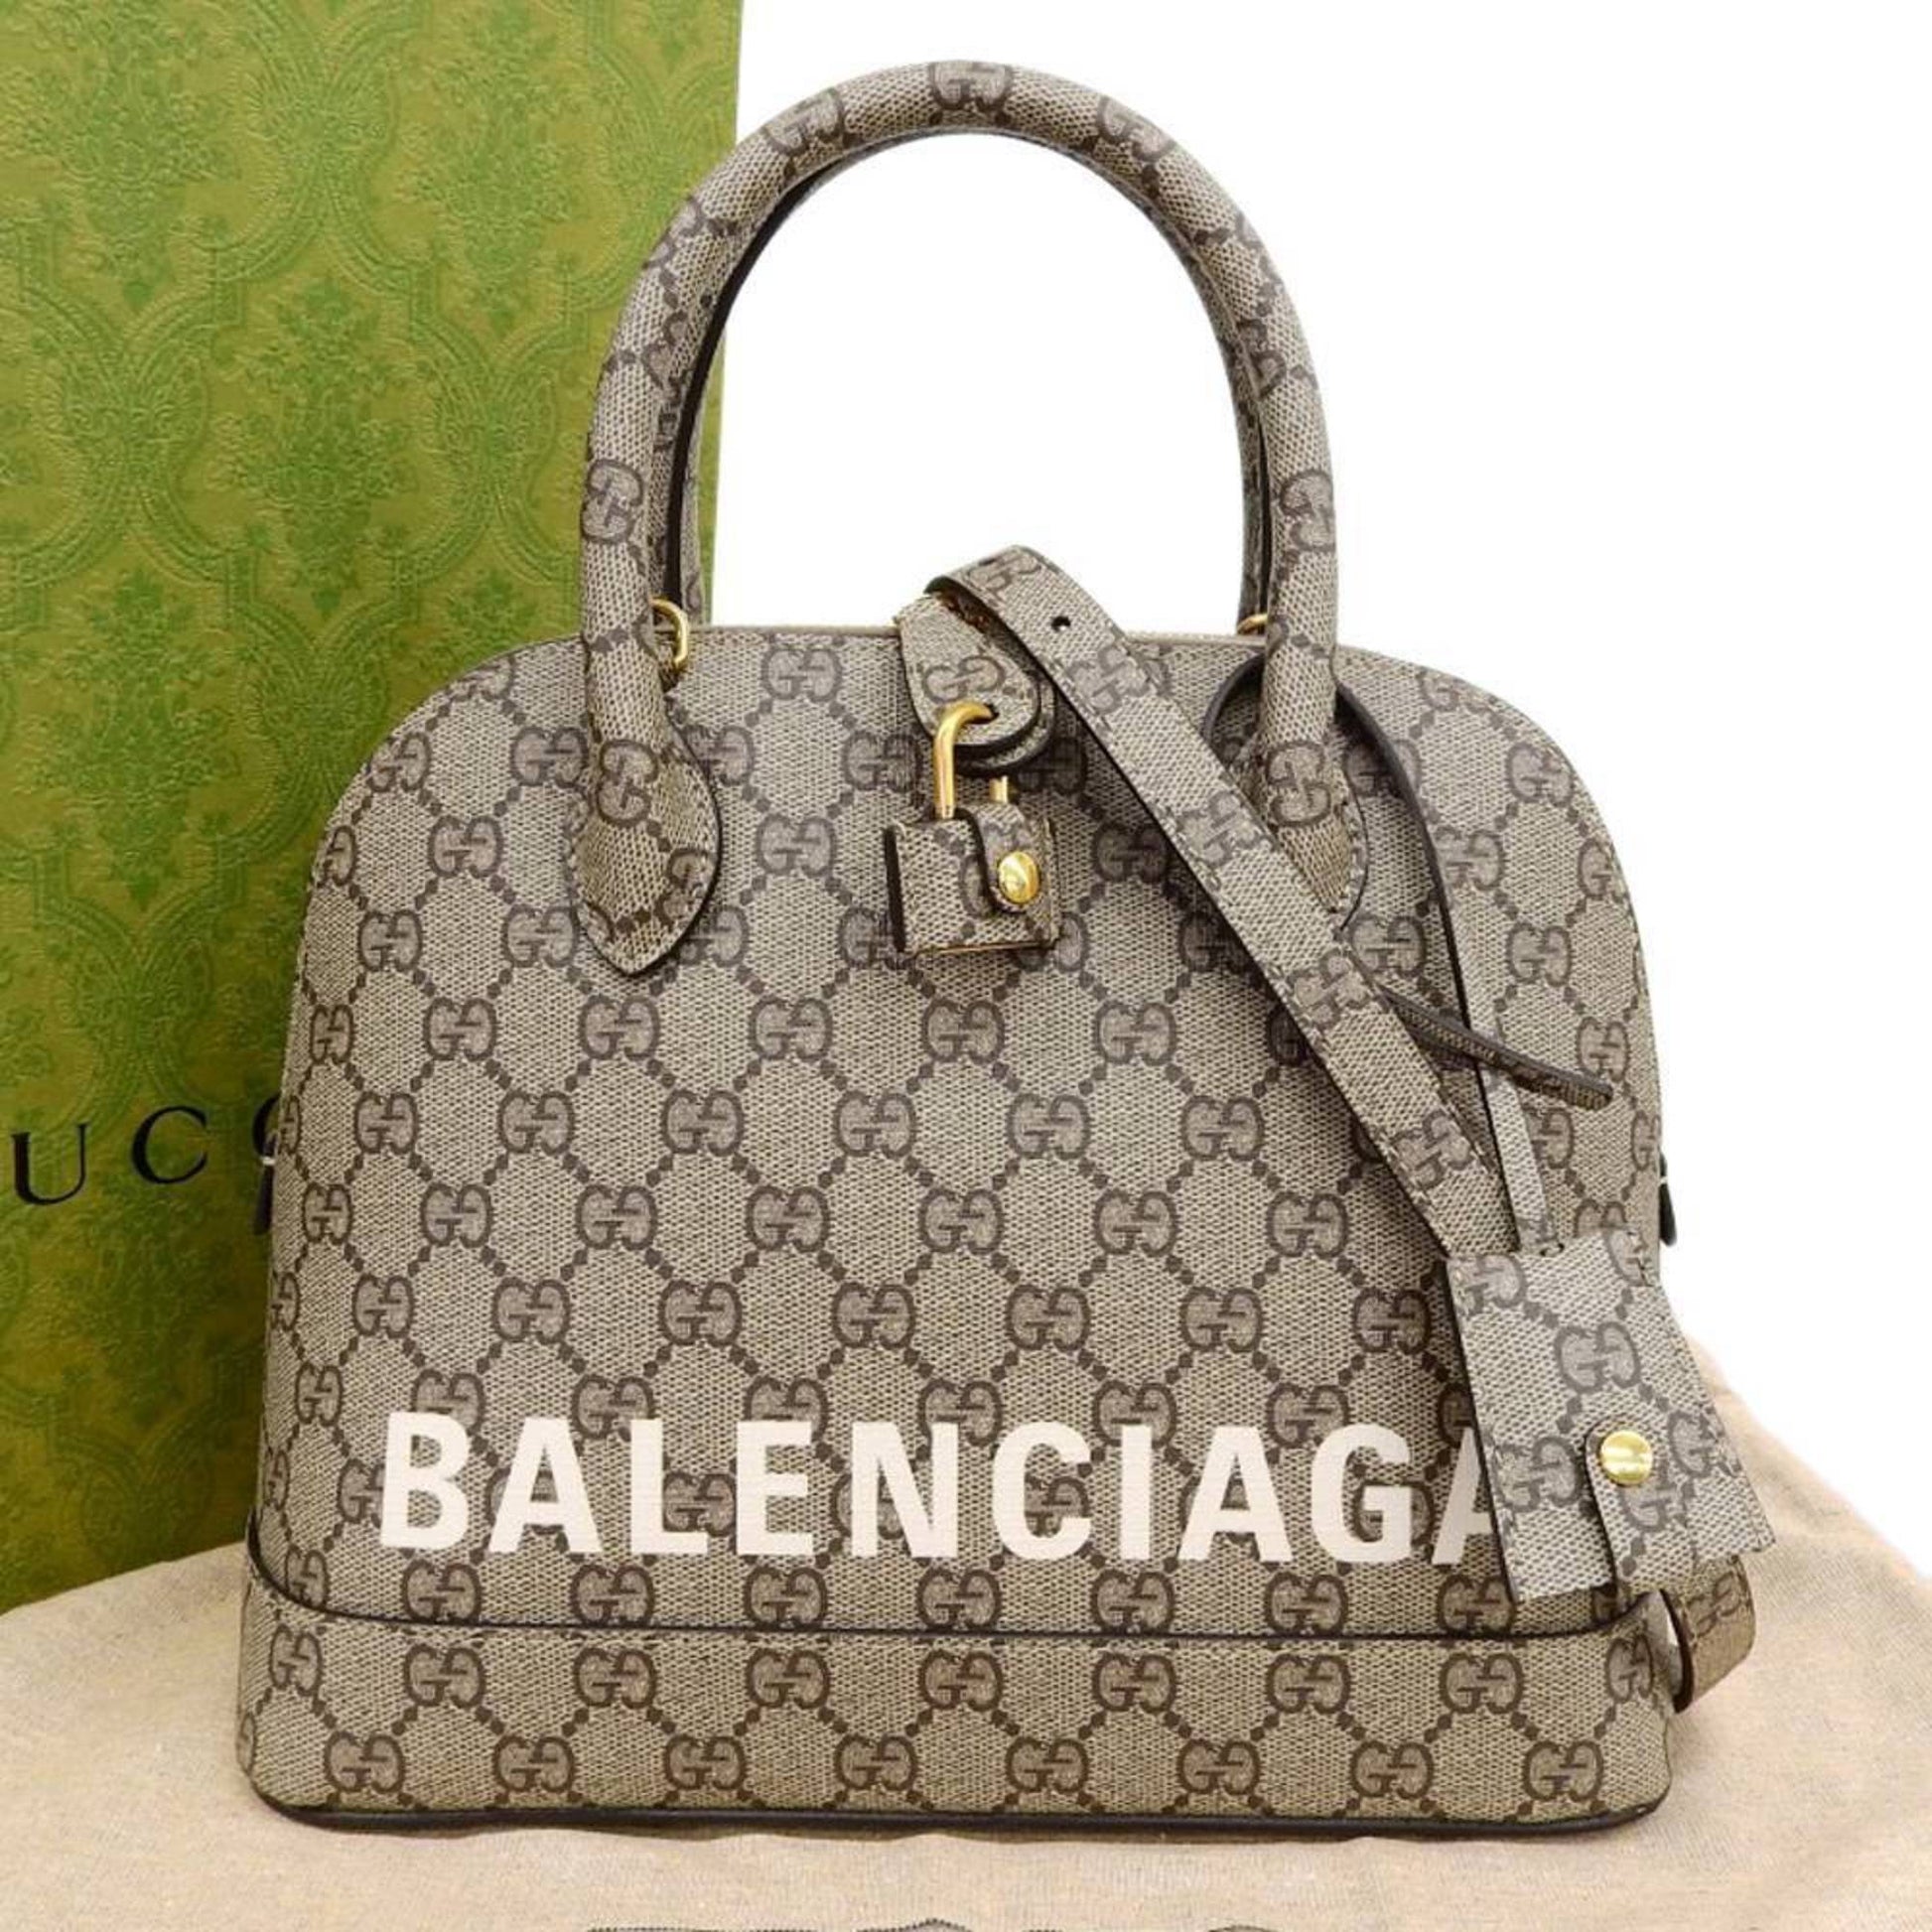 Gucci x Balenciaga The Hacker Project: Release, Where to Buy